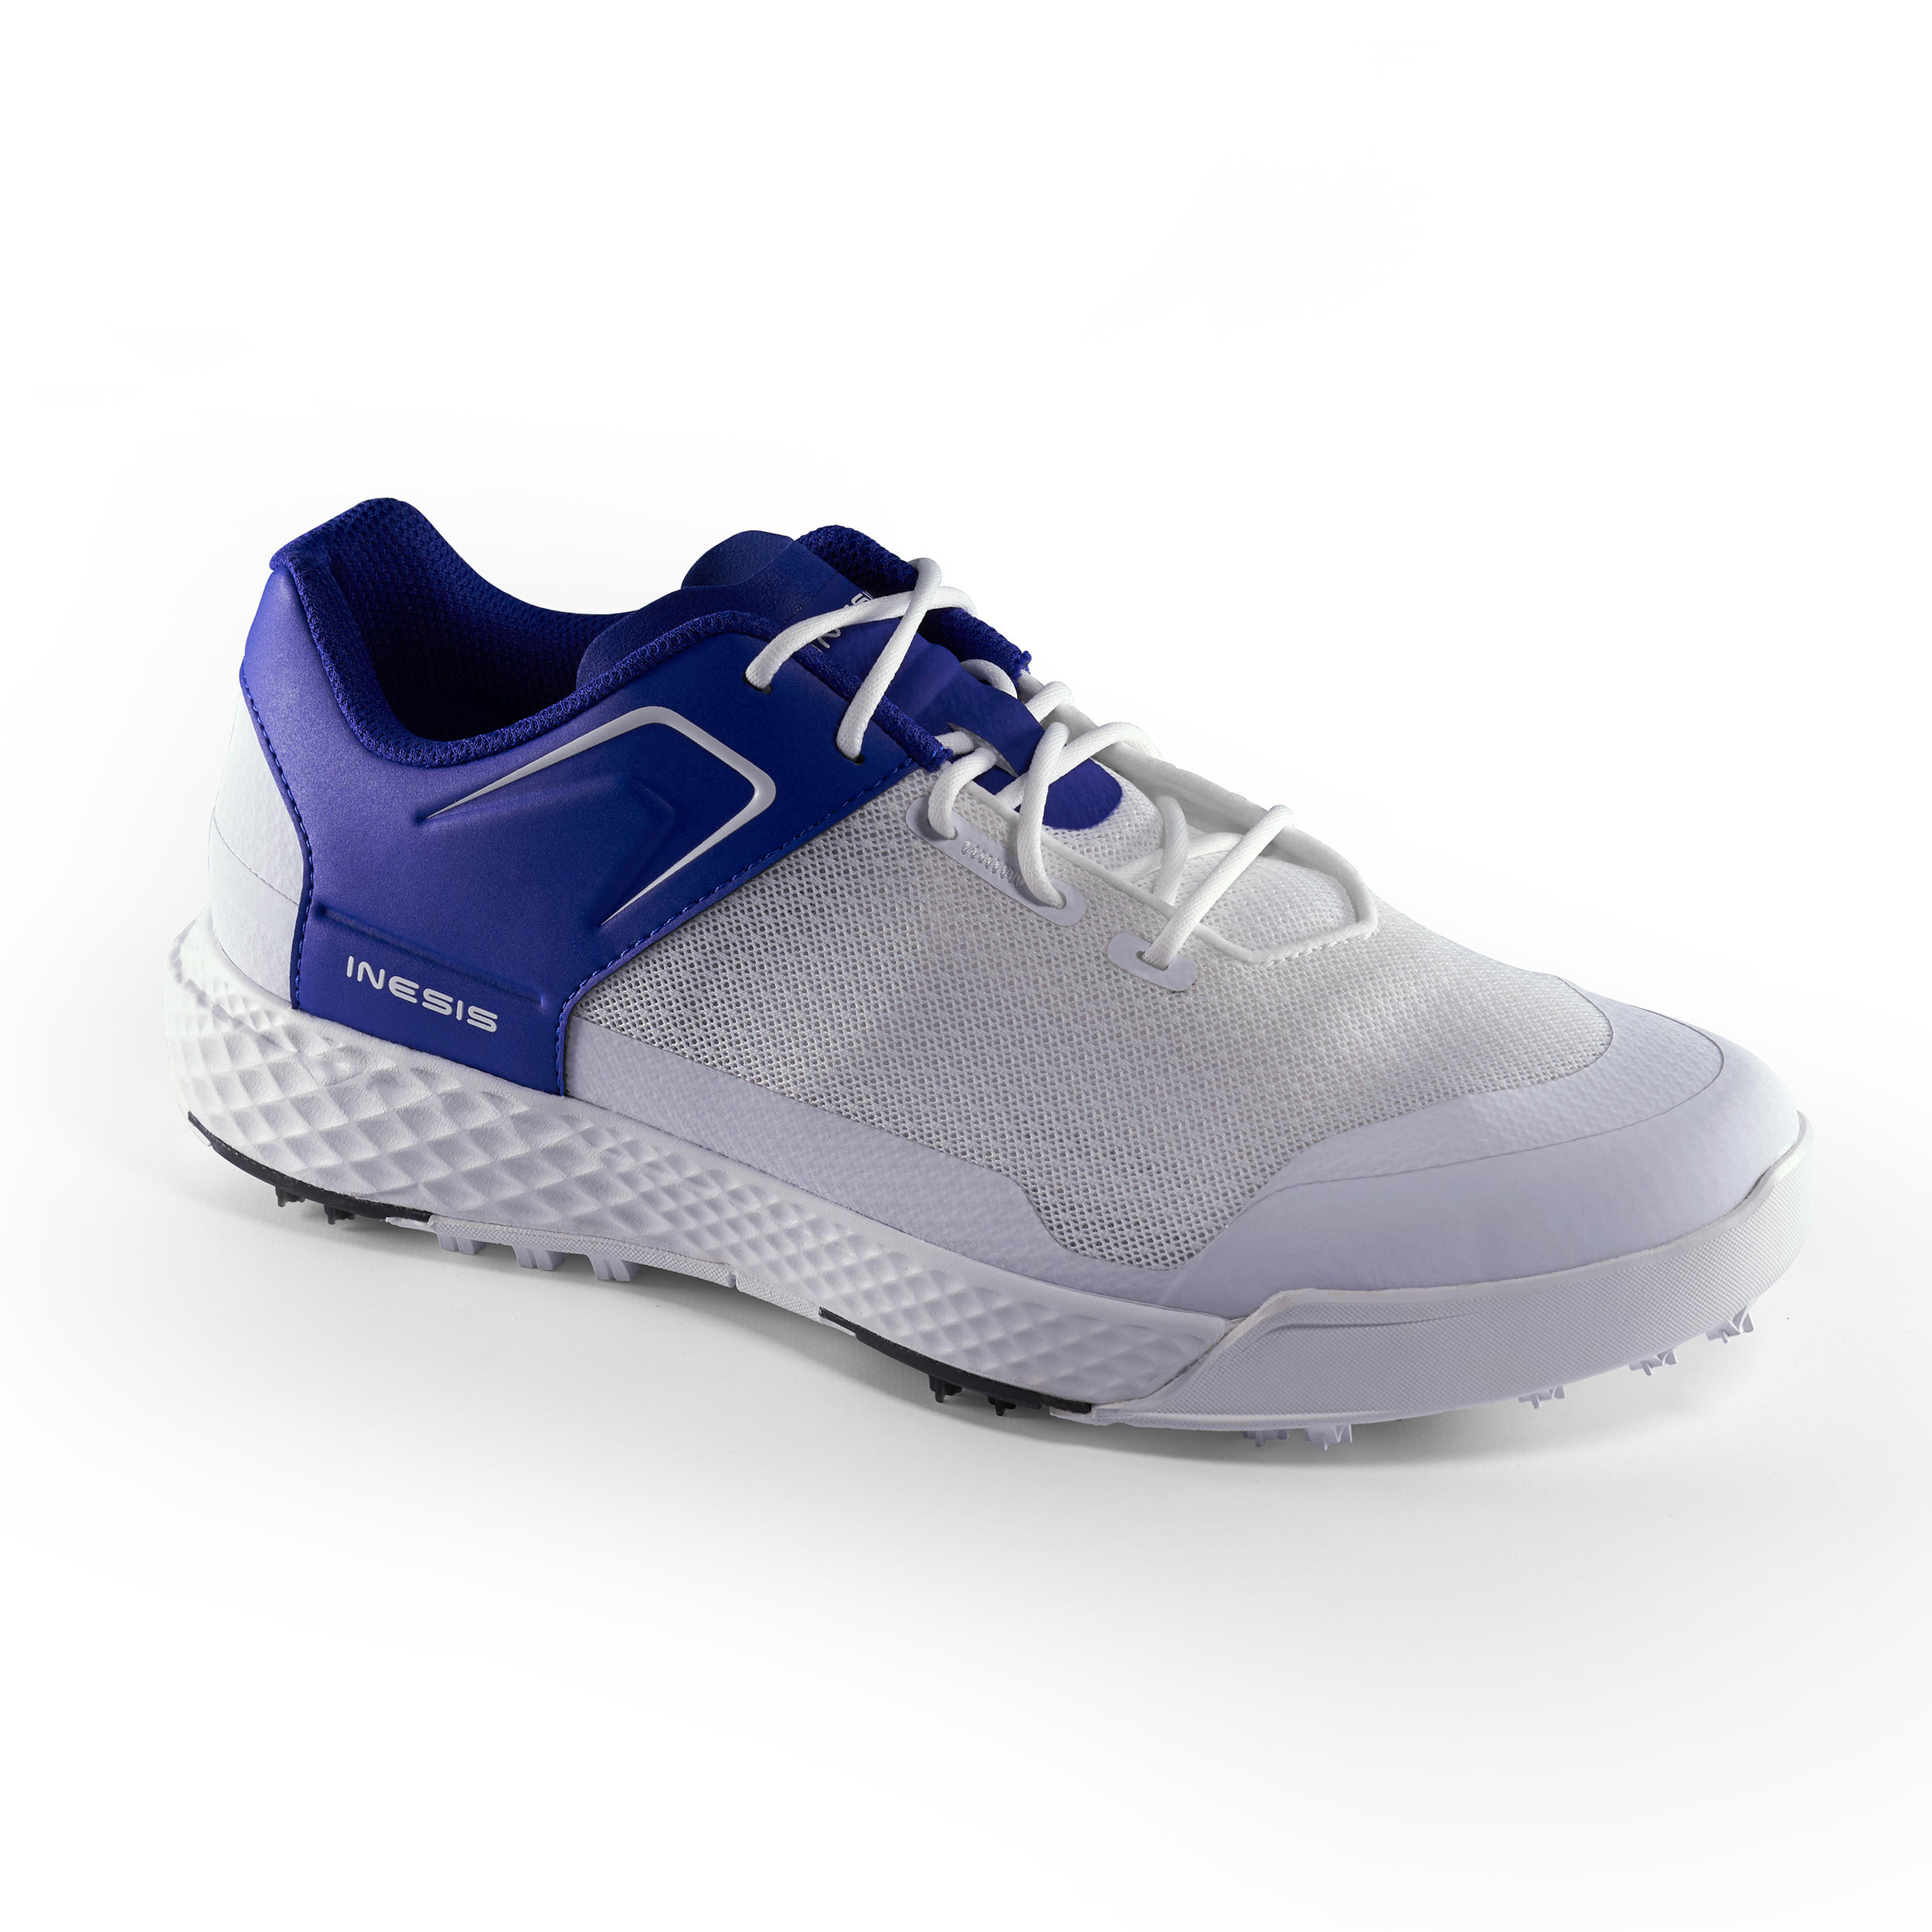 decathlon golf shoes